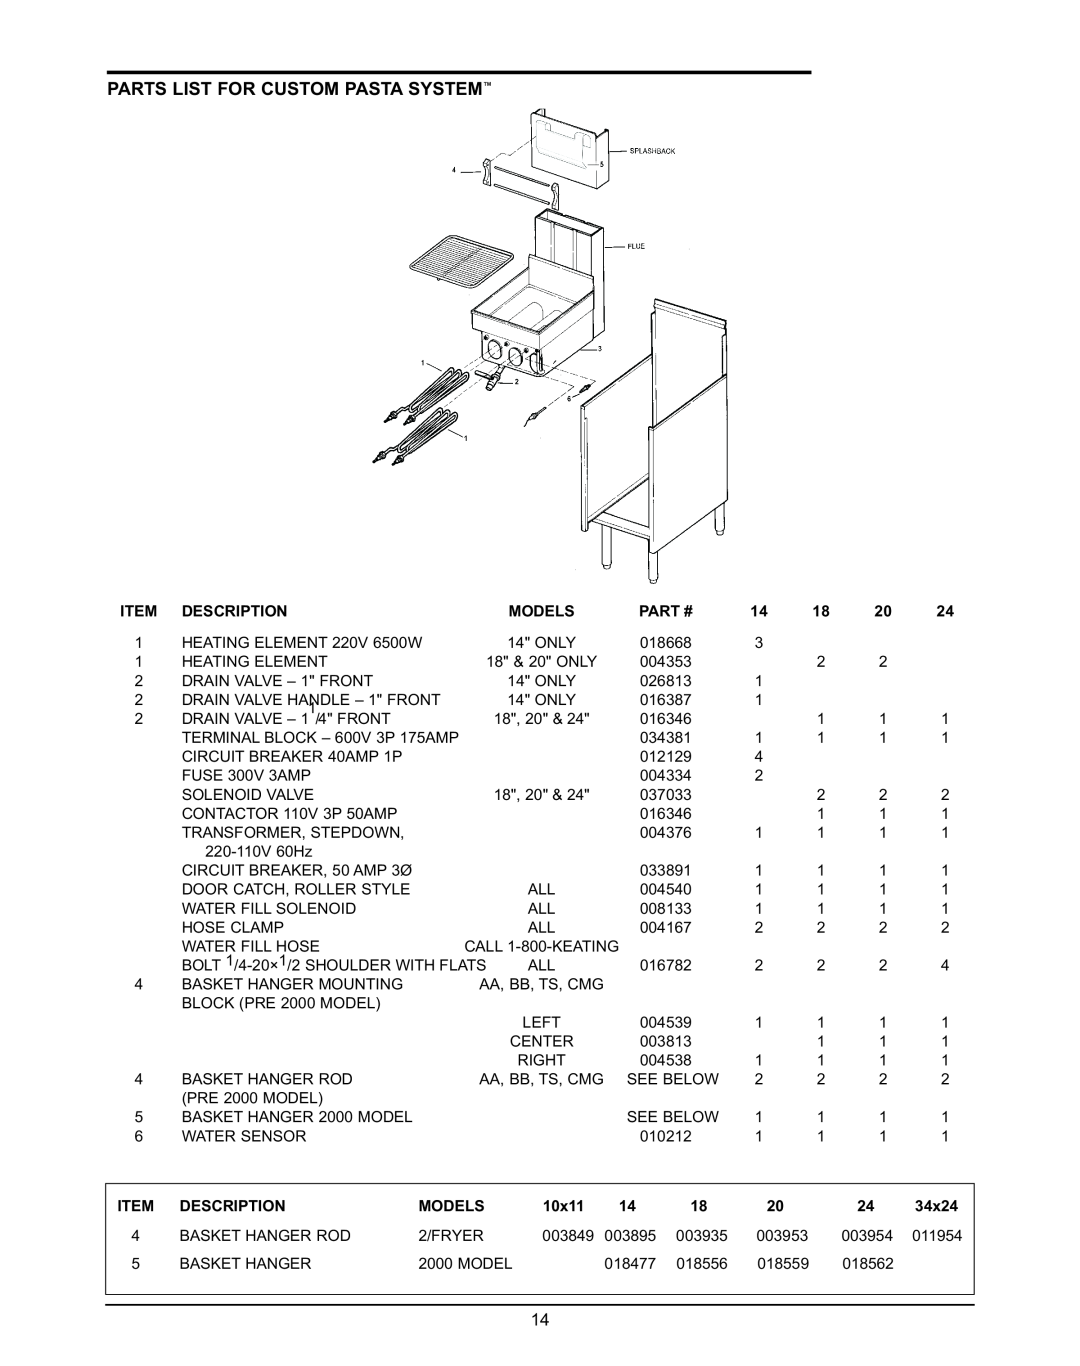 Keating Of Chicago 240V service manual Parts List For Custom Pasta System, Description, Models, Part #, 10x11, 34x24 